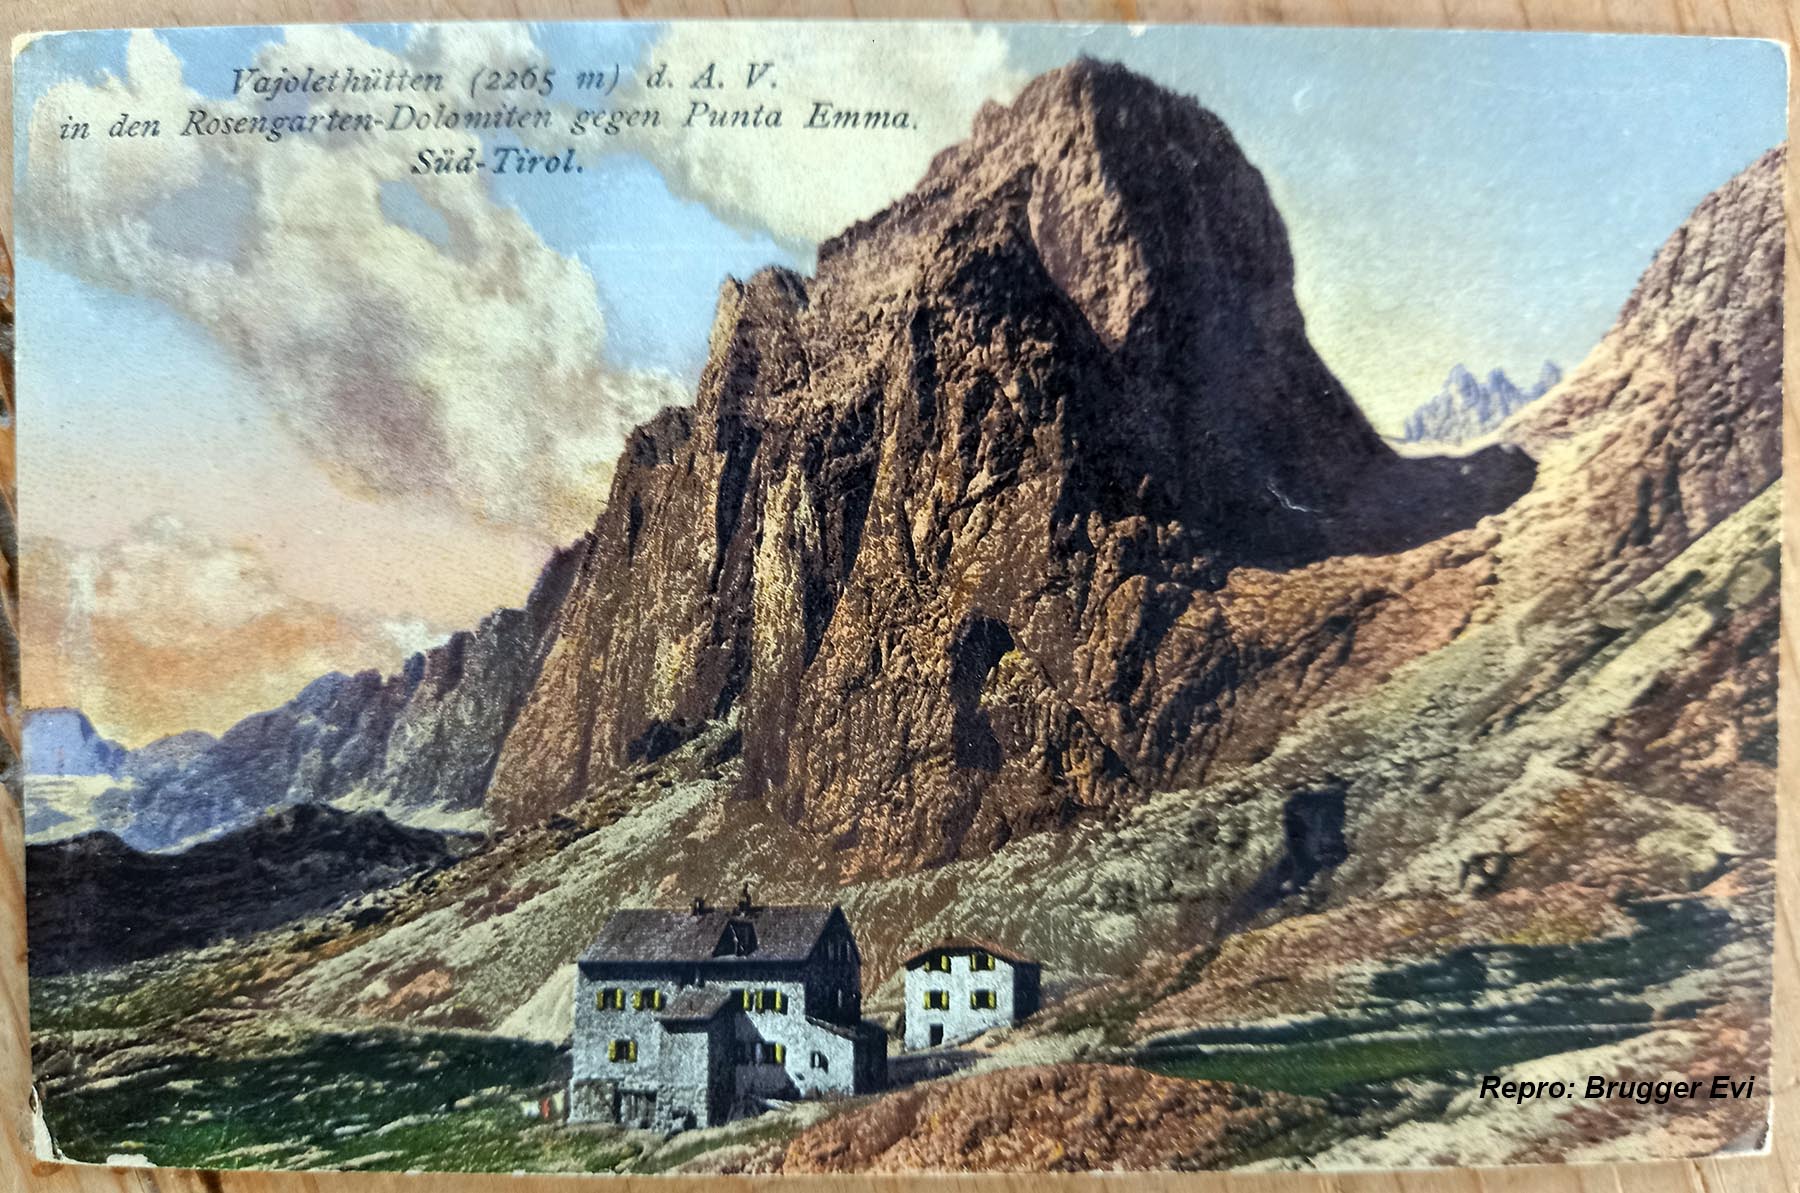 Vajolethütten um 1910